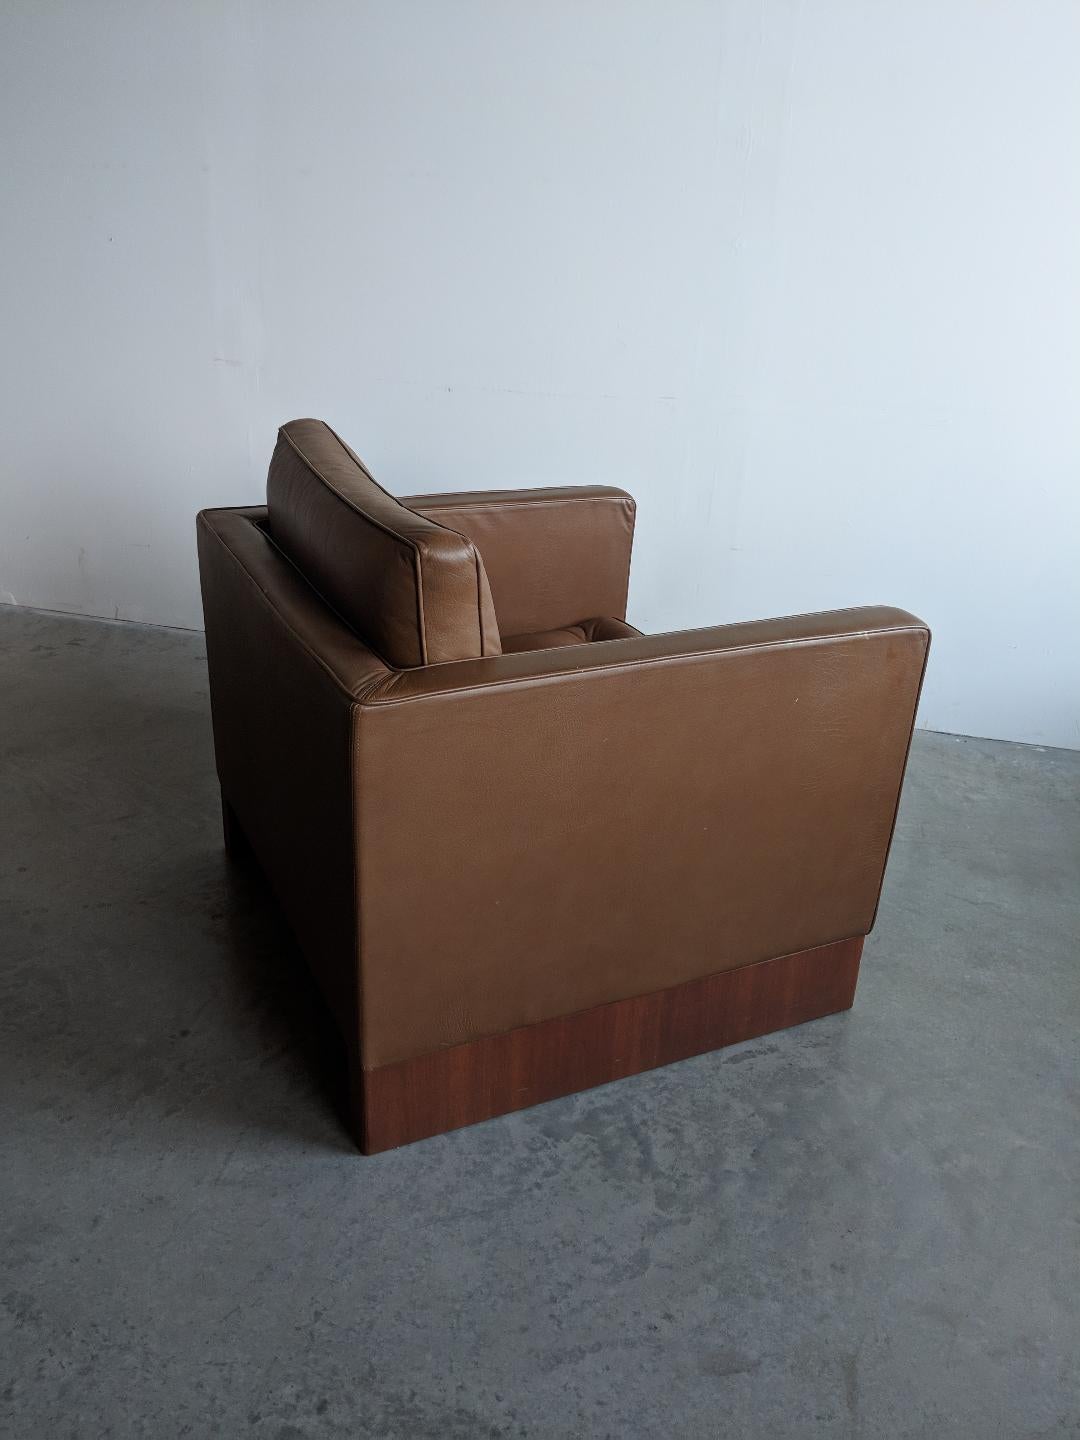 International Style Mies van der Rohe Designed Lounge Chair, circa 1968